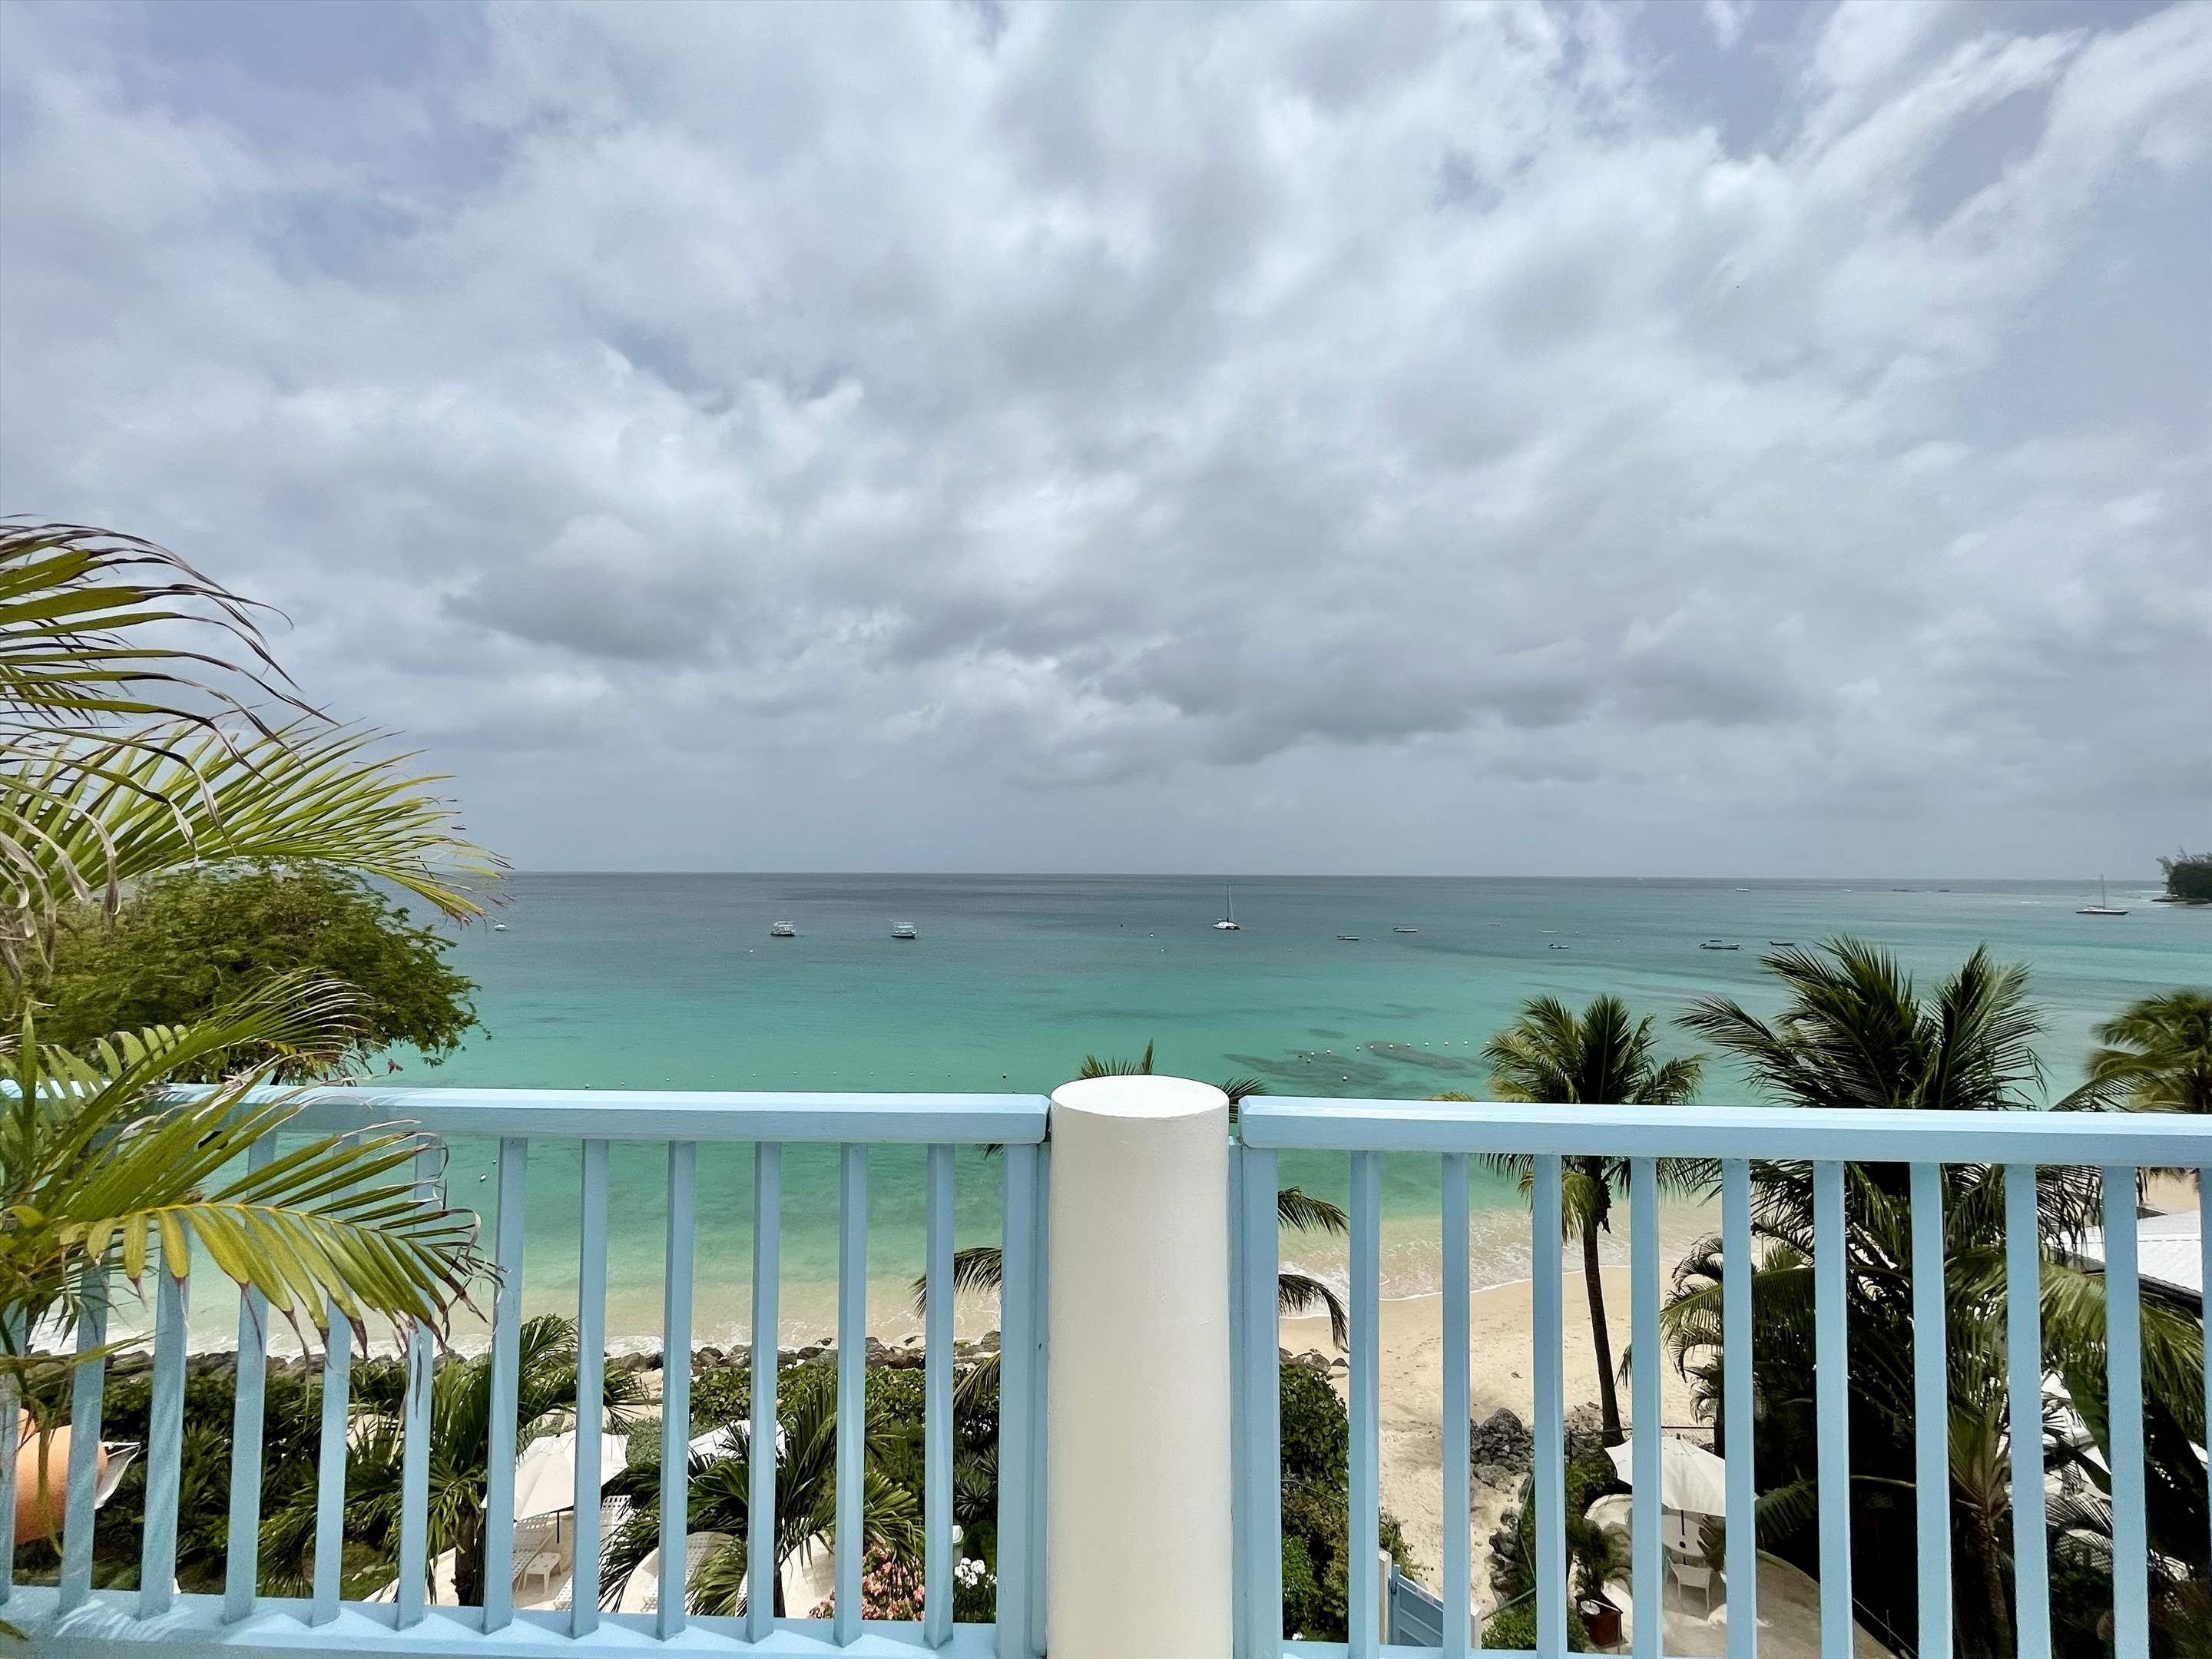 Villas on the Beach 403, 2 bedroom, 2 bedroom apartment in St. James & West Coast, Barbados Photo #21